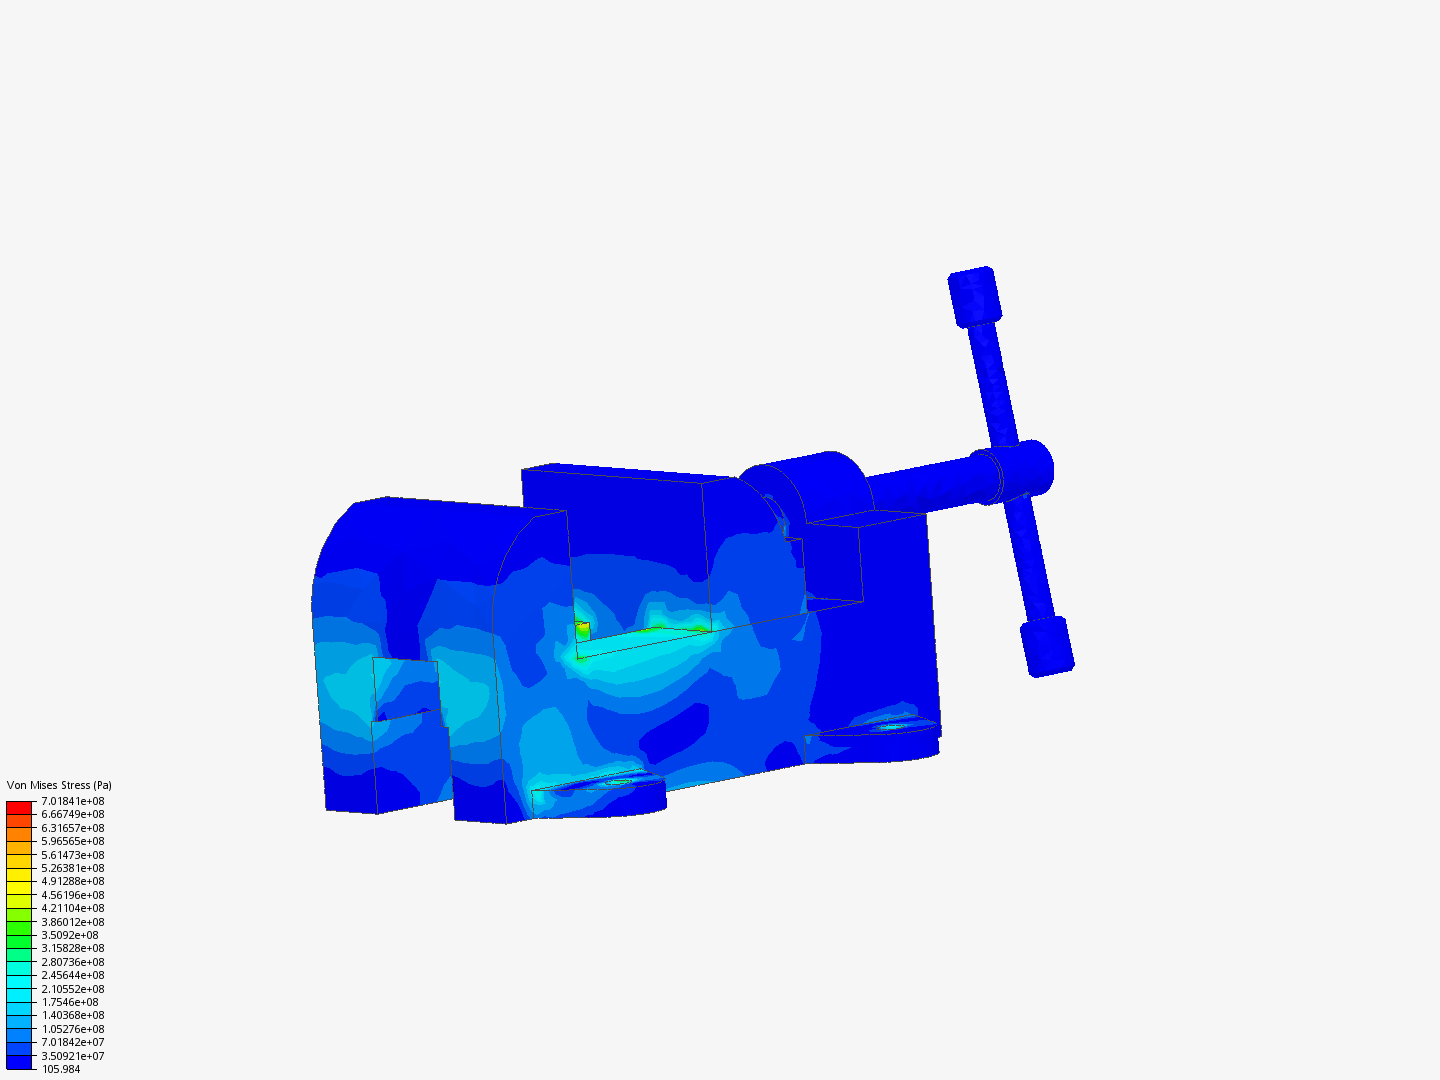 Vise force simulation image